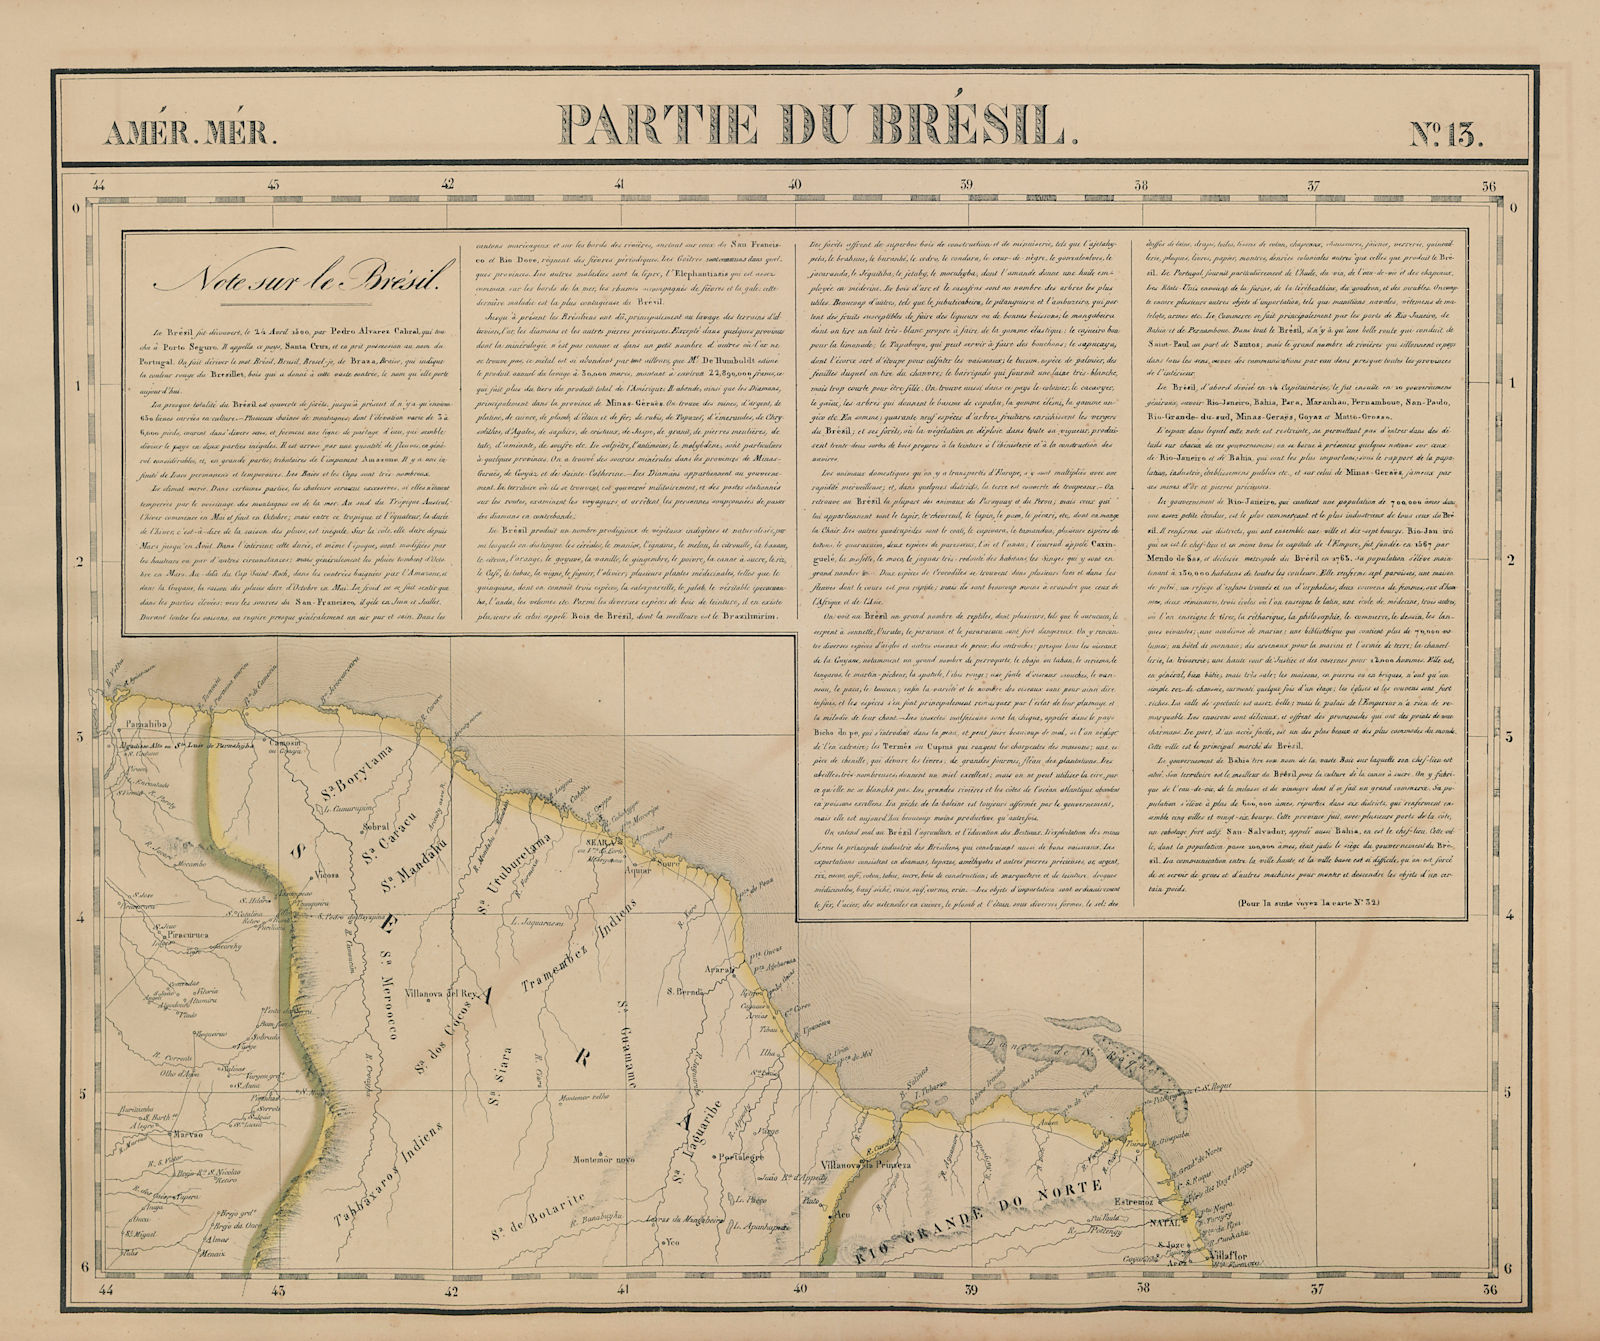 Amér. Mér. Brésil #13. North-eastern Brazil. MA PI RN CE. VANDERMAELEN 1827 map